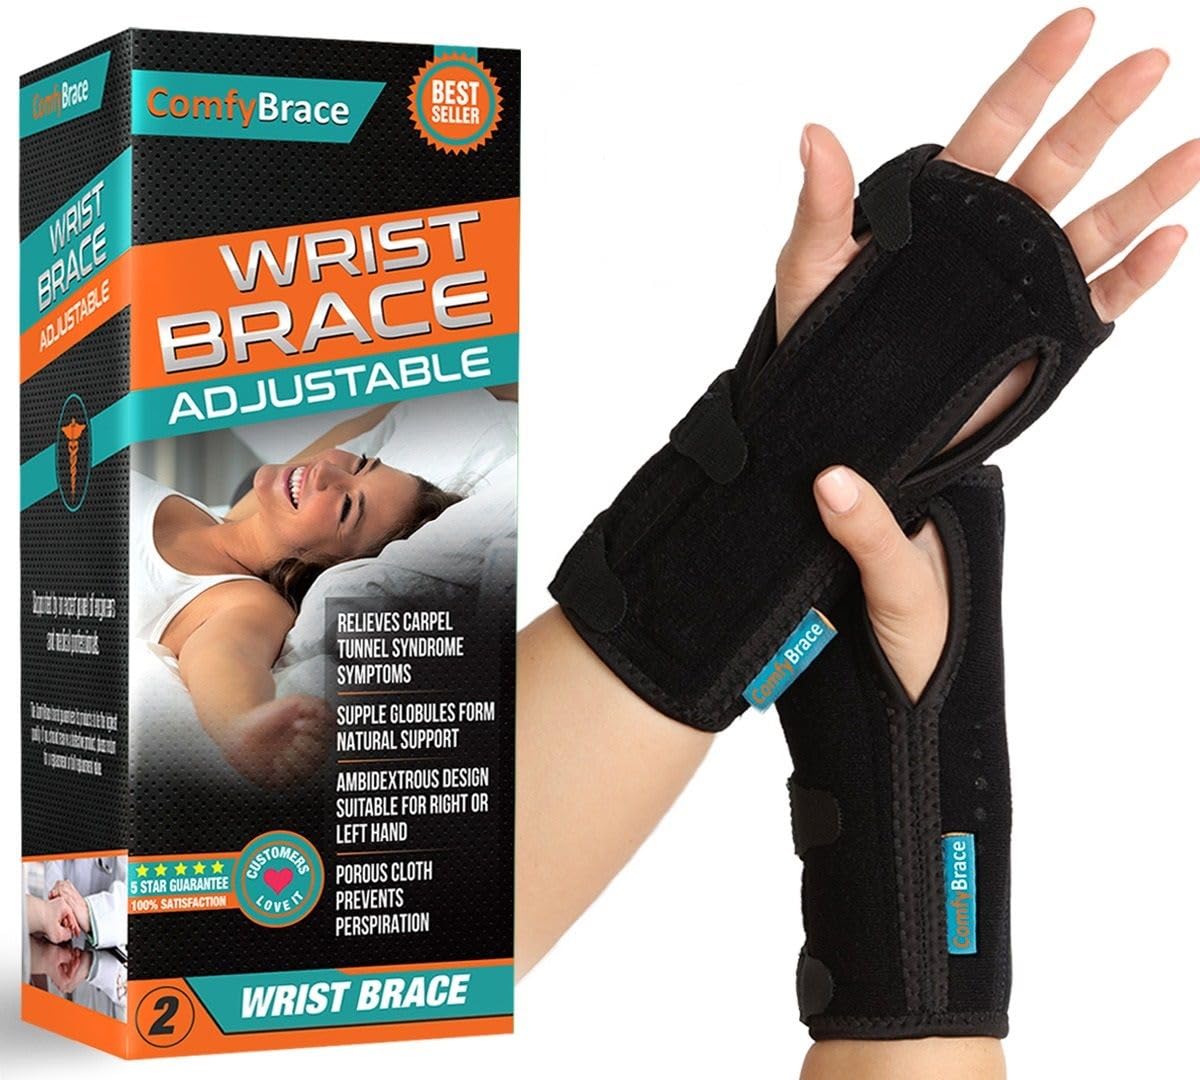 ComfyBrace Night Wrist Sleep Support Brace Review